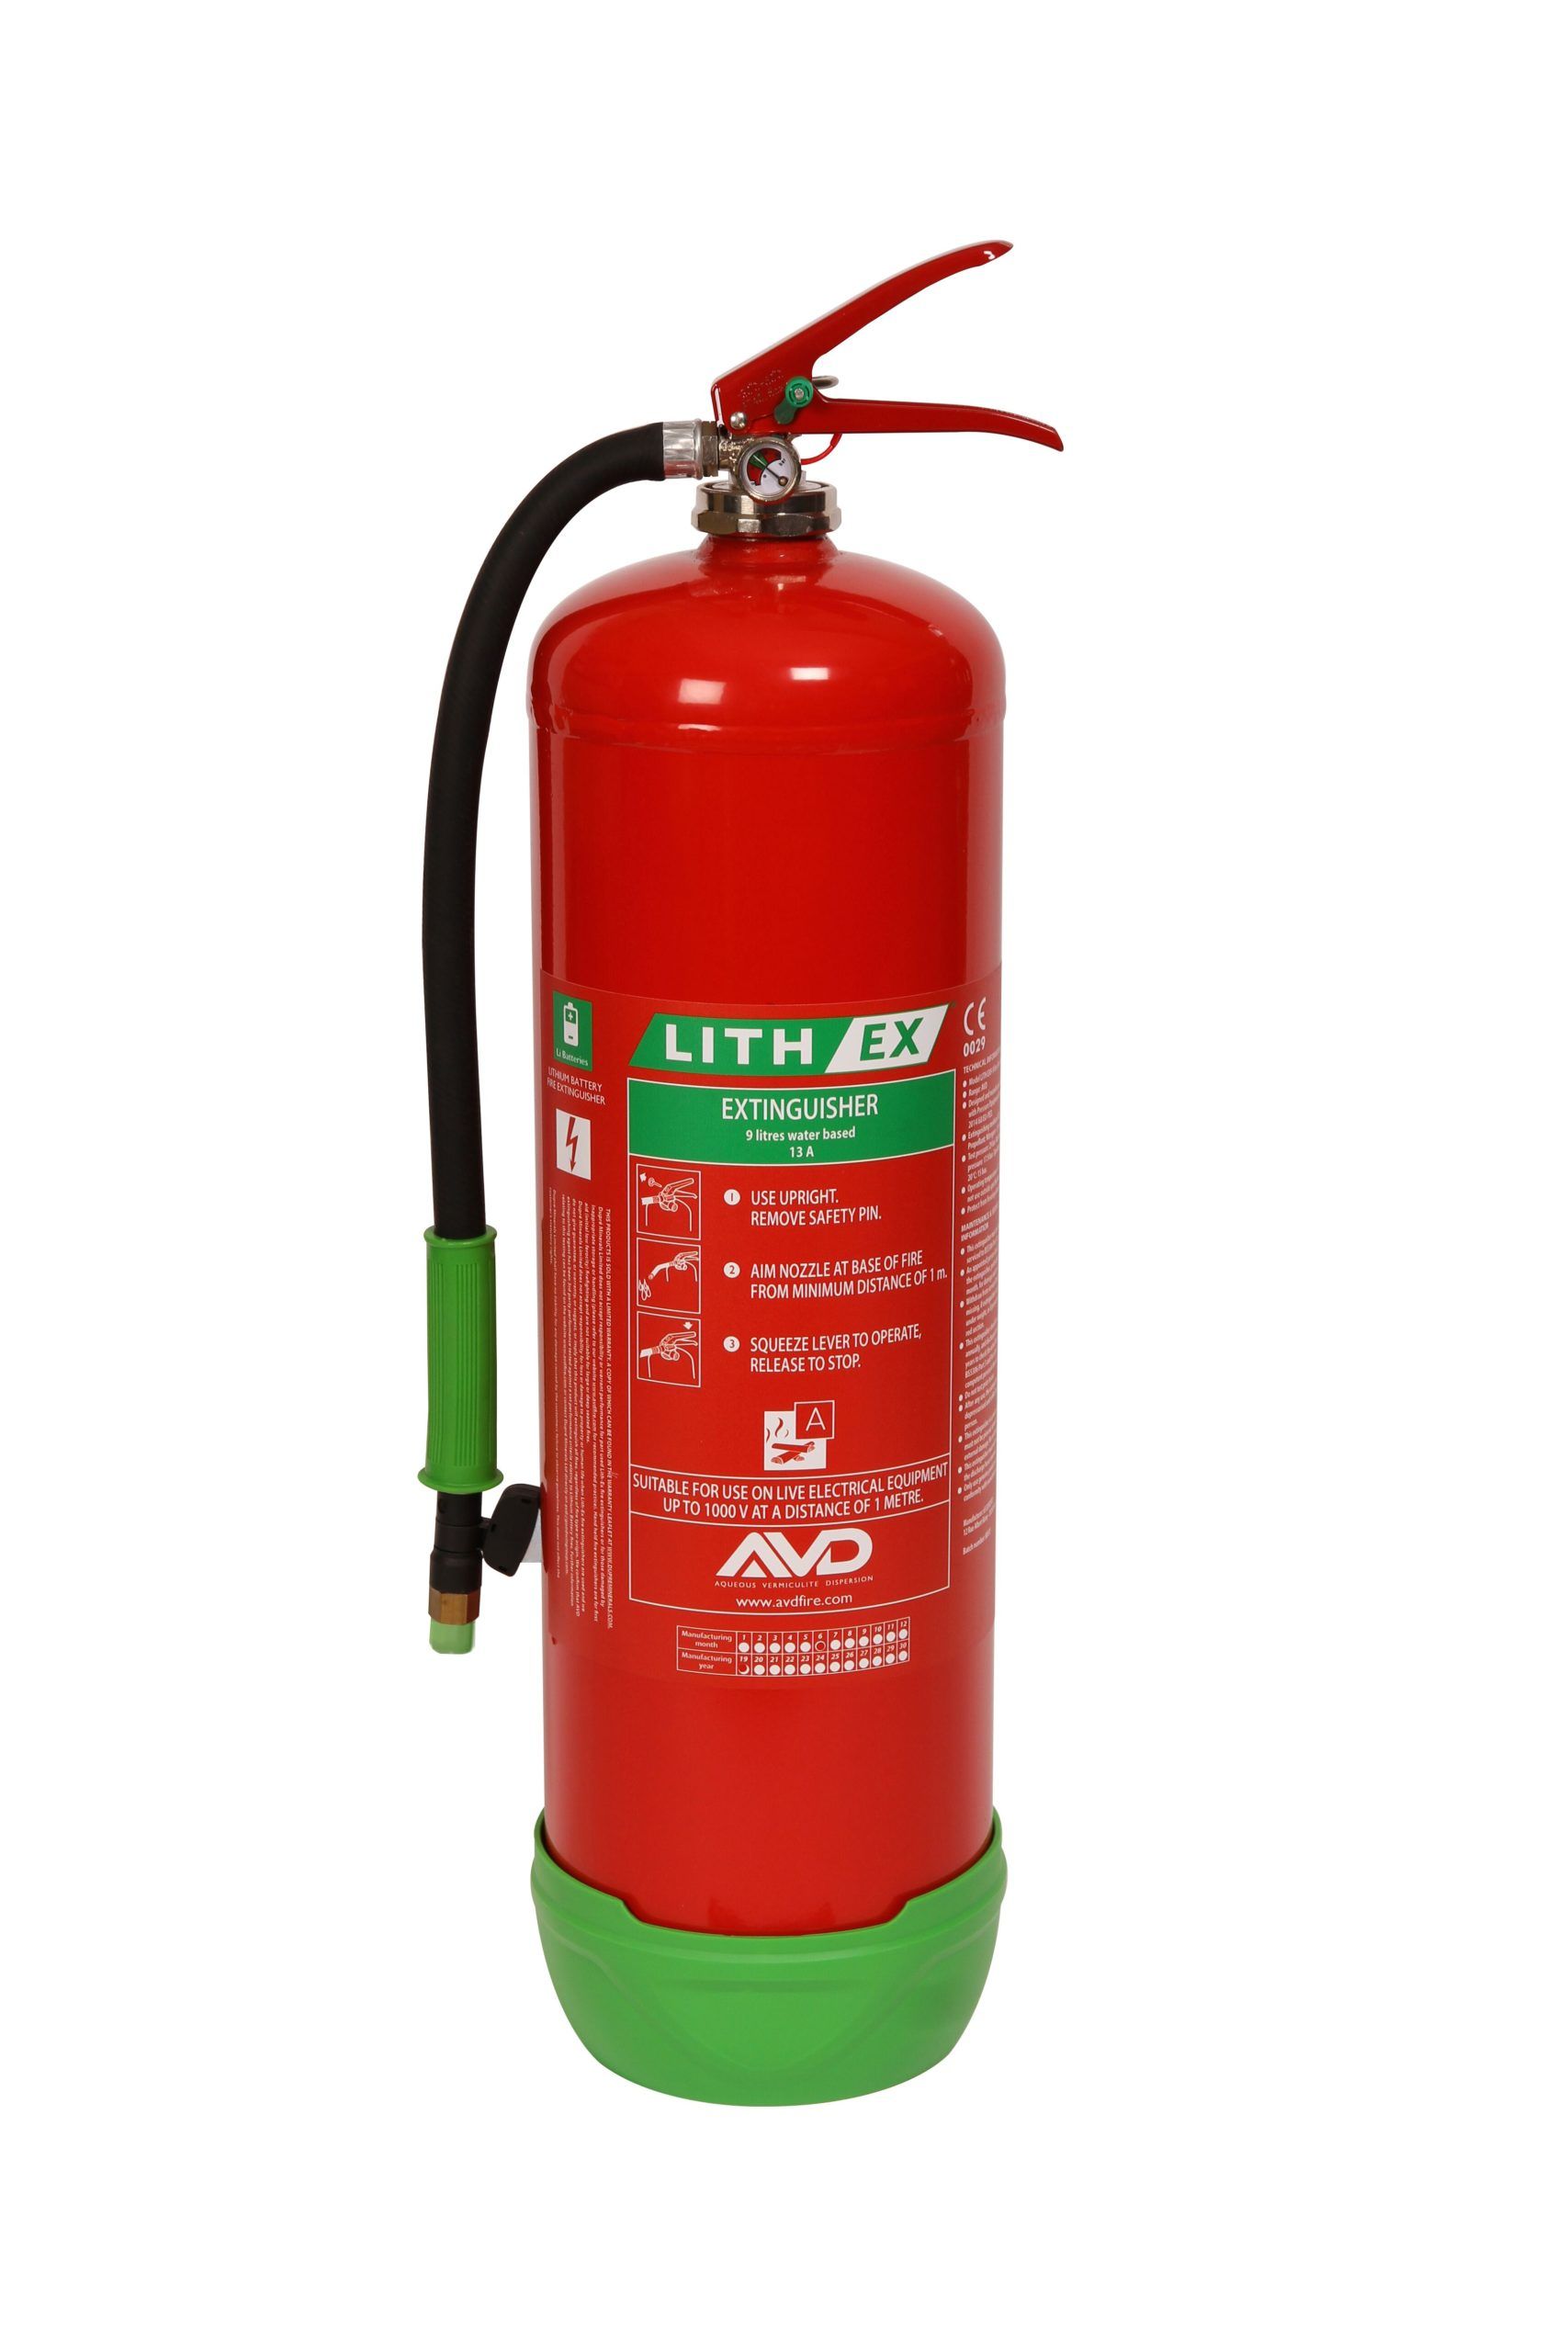 auditie engel Makkelijker maken Lith-Ex 9 Litre Fire Extinguisher - AVD Fire